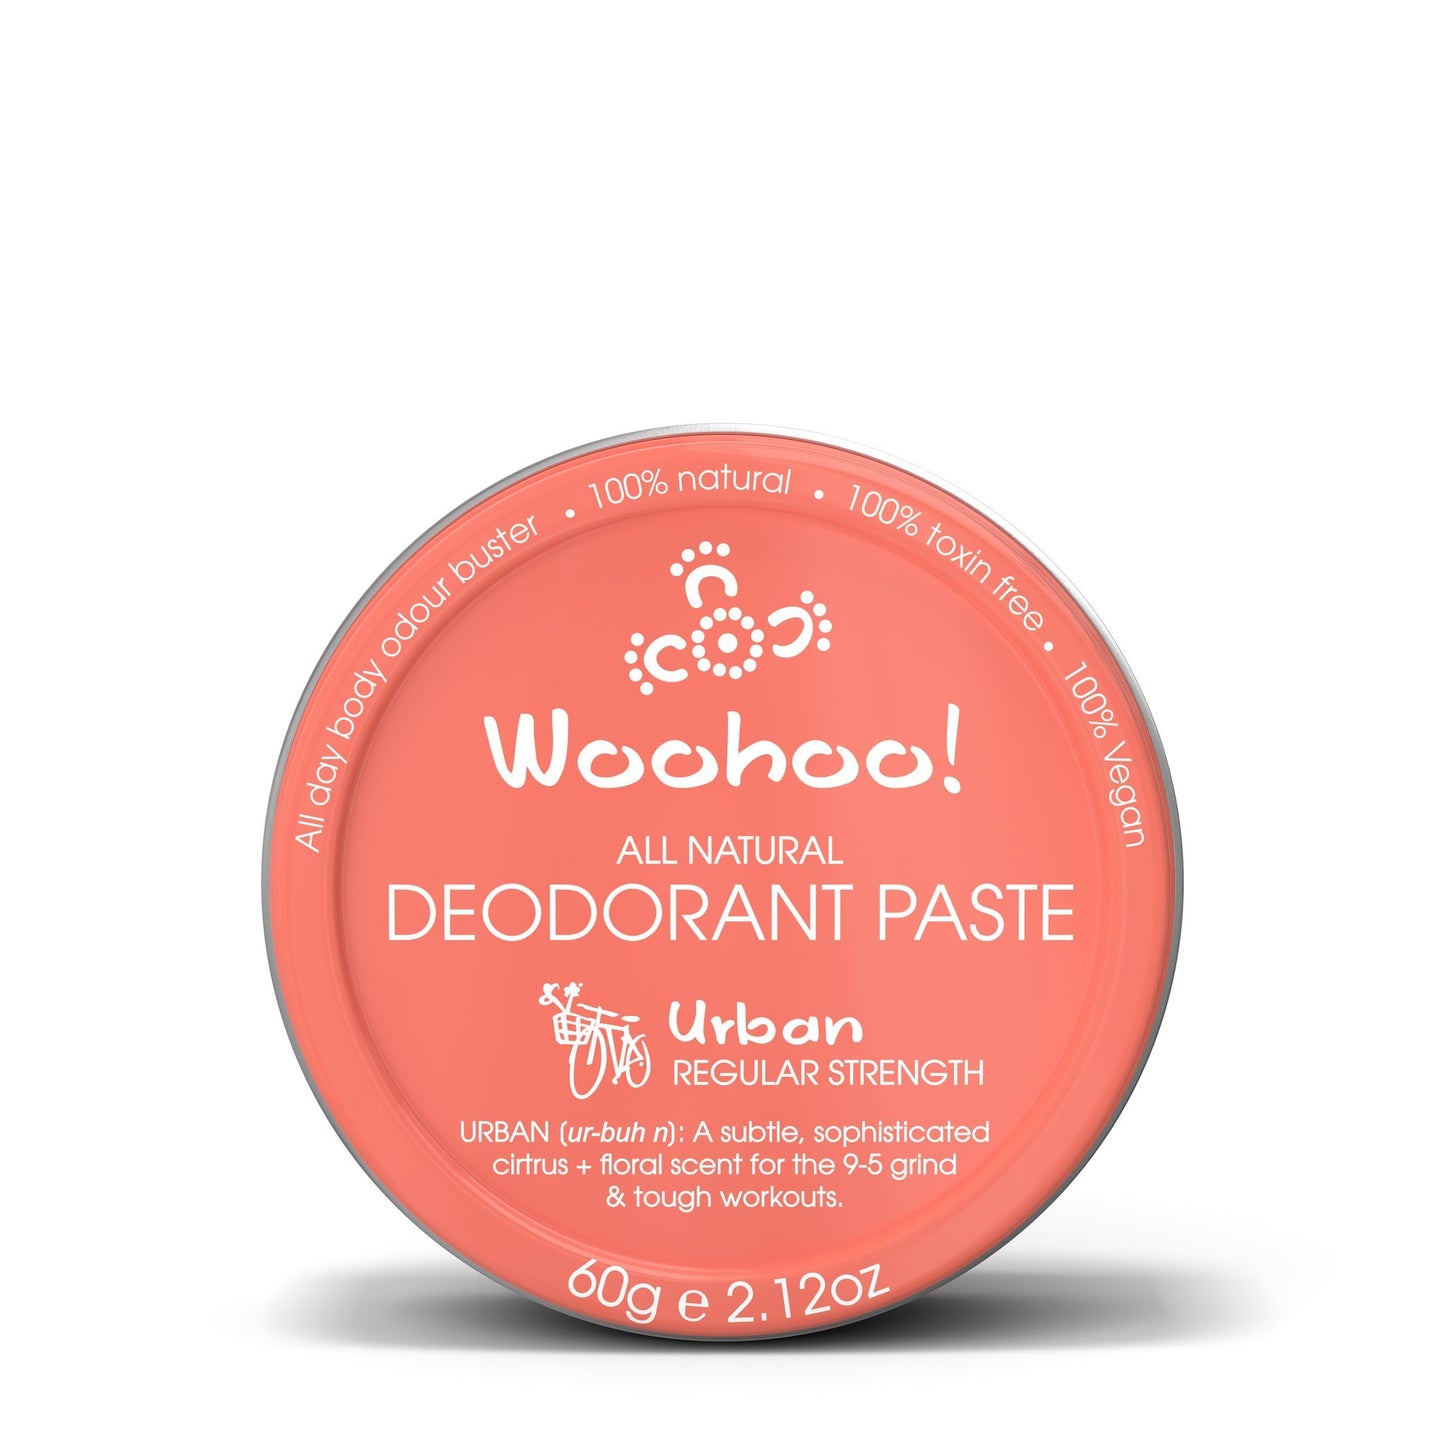 Woohoo All Natural Deodorant Paste